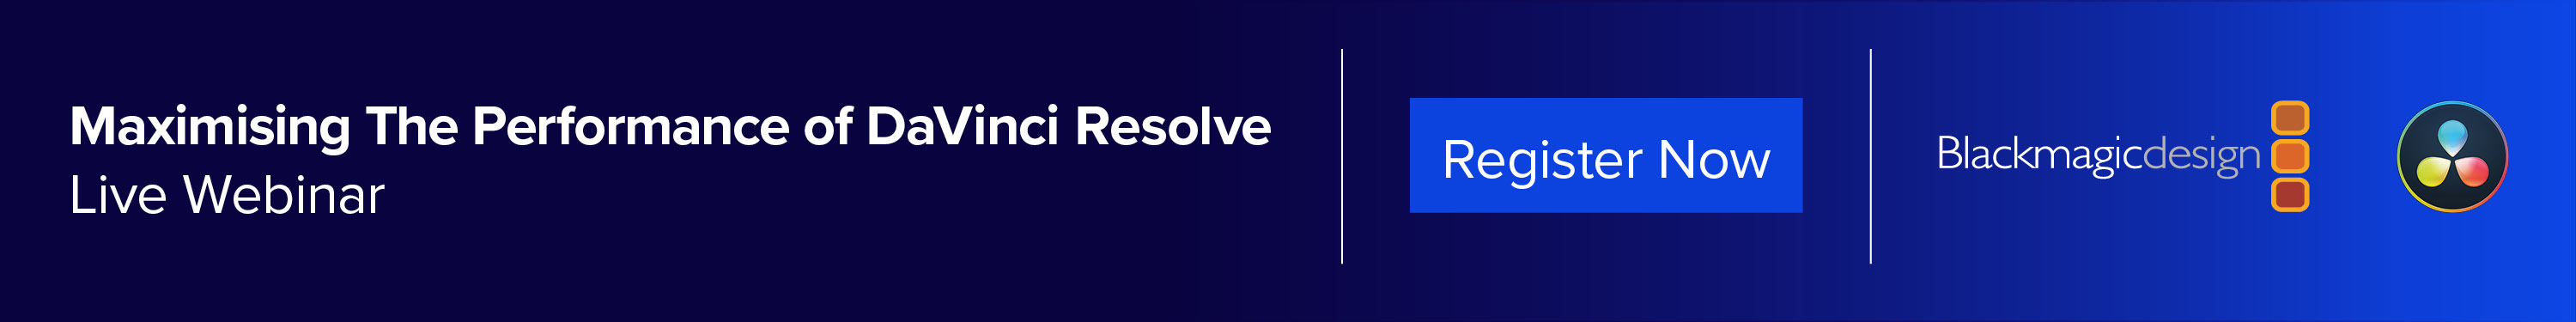 Maximising the performance of DaVinci Resolve webinar.